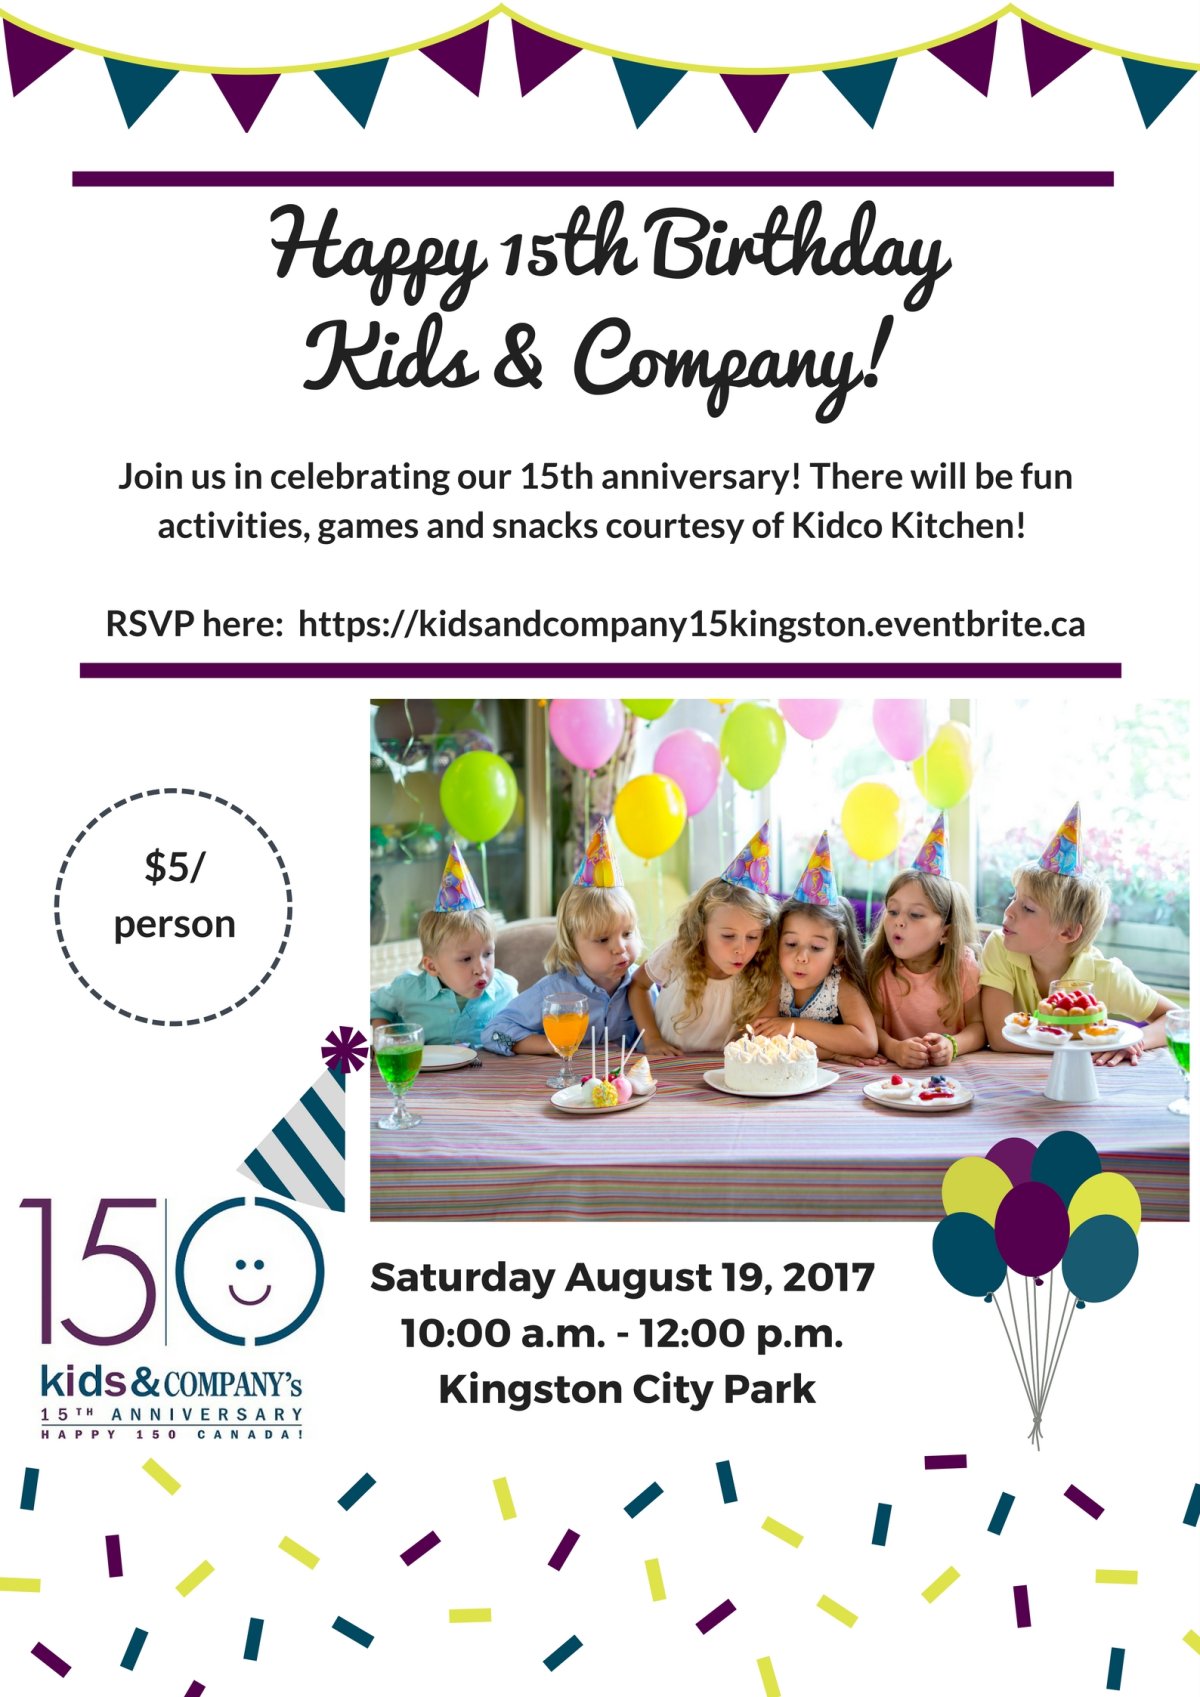 Kids & Company Kingston’s 15th Anniversary Celebration! - image